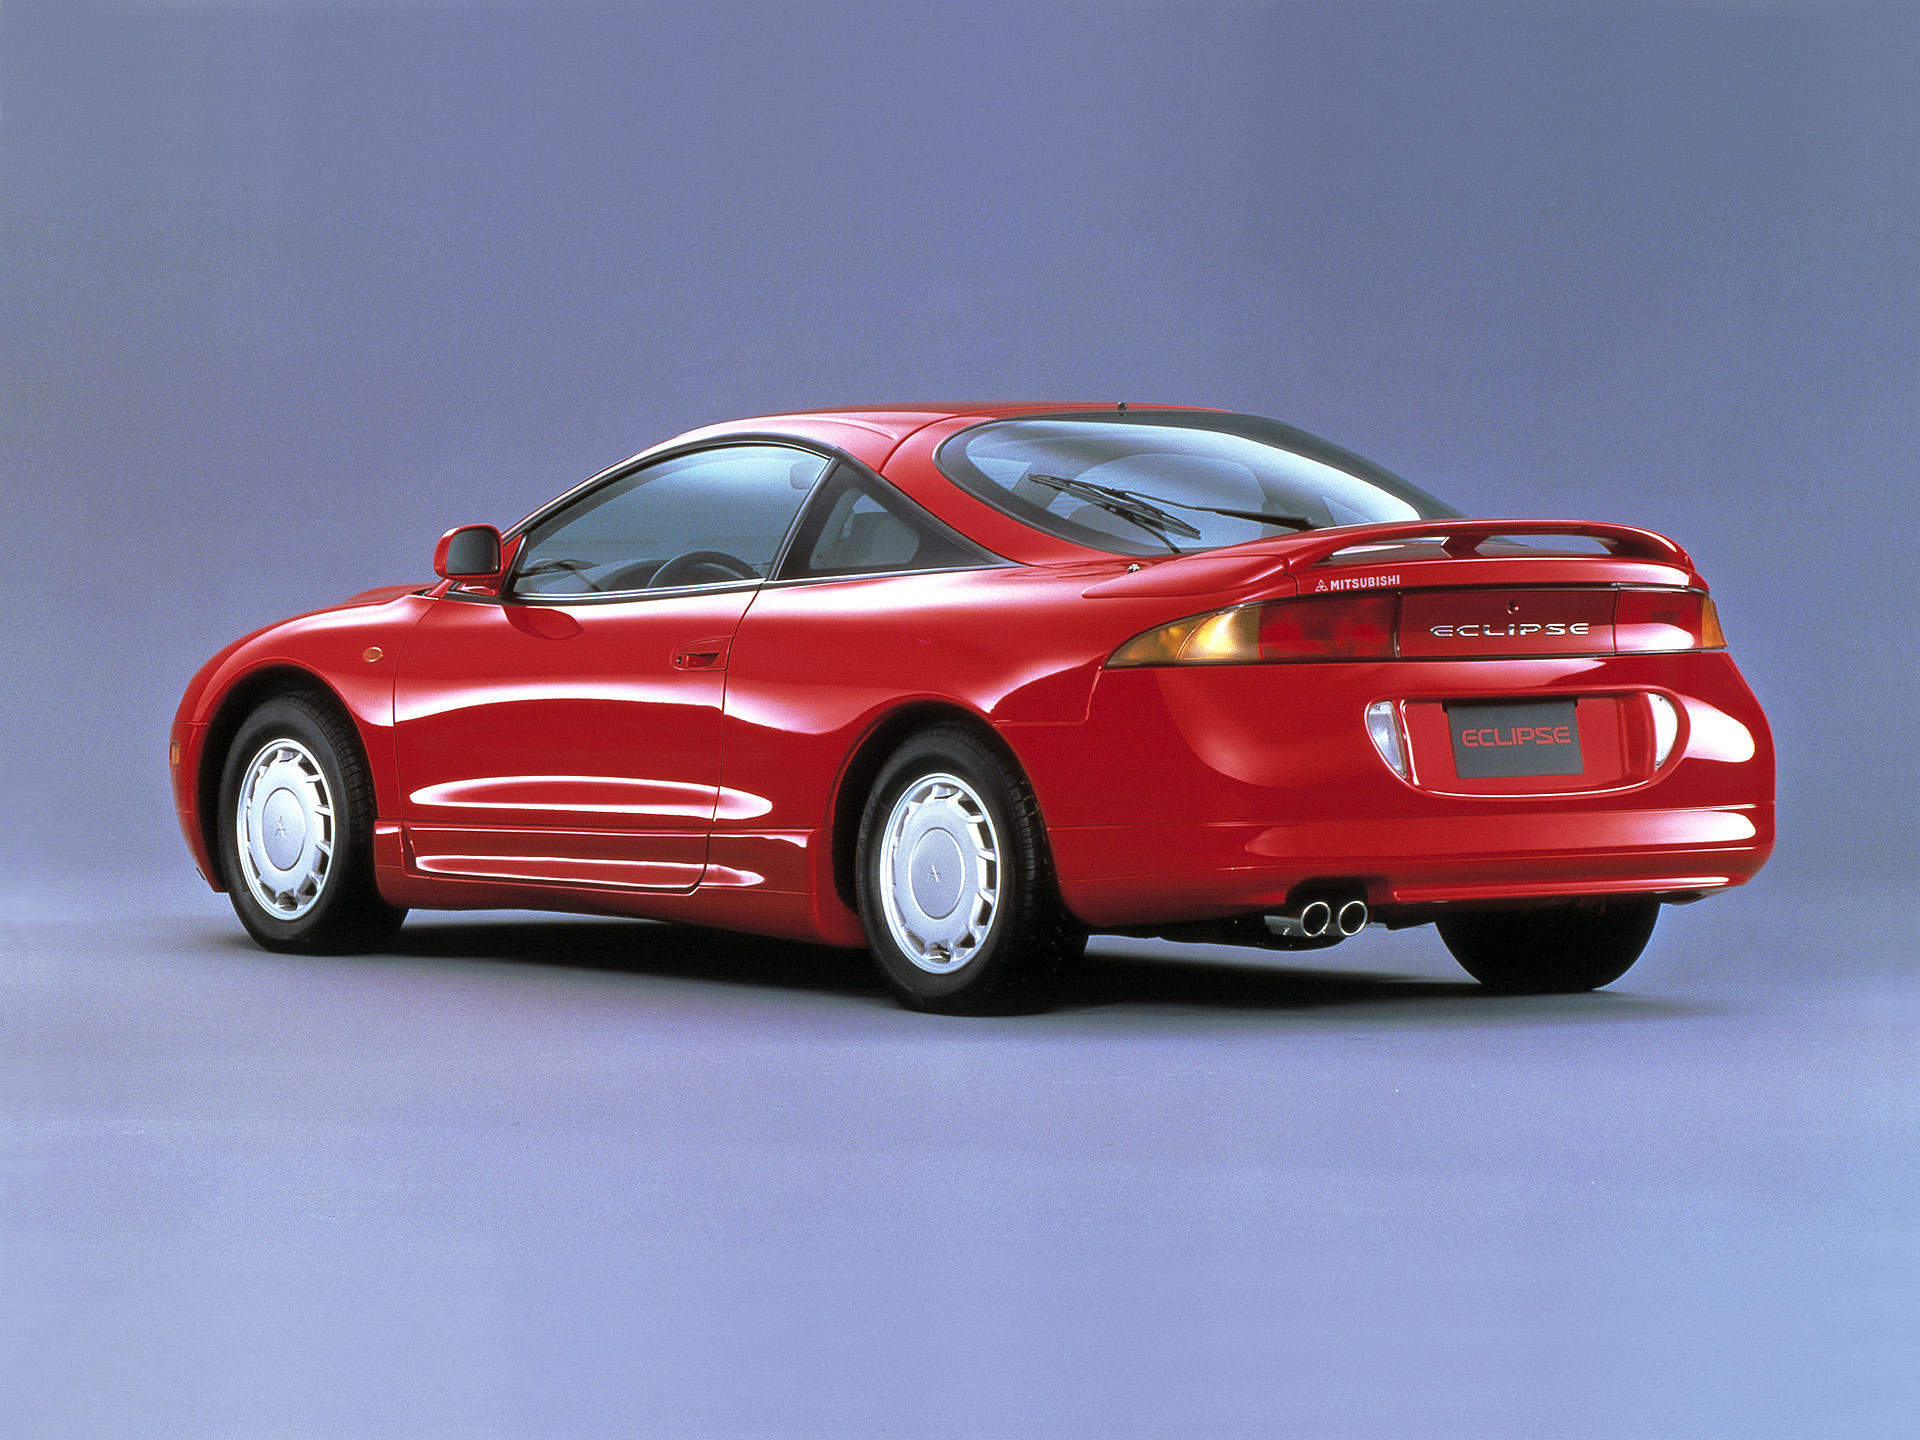  1995 Mitsubishi Eclipse Wallpaper.